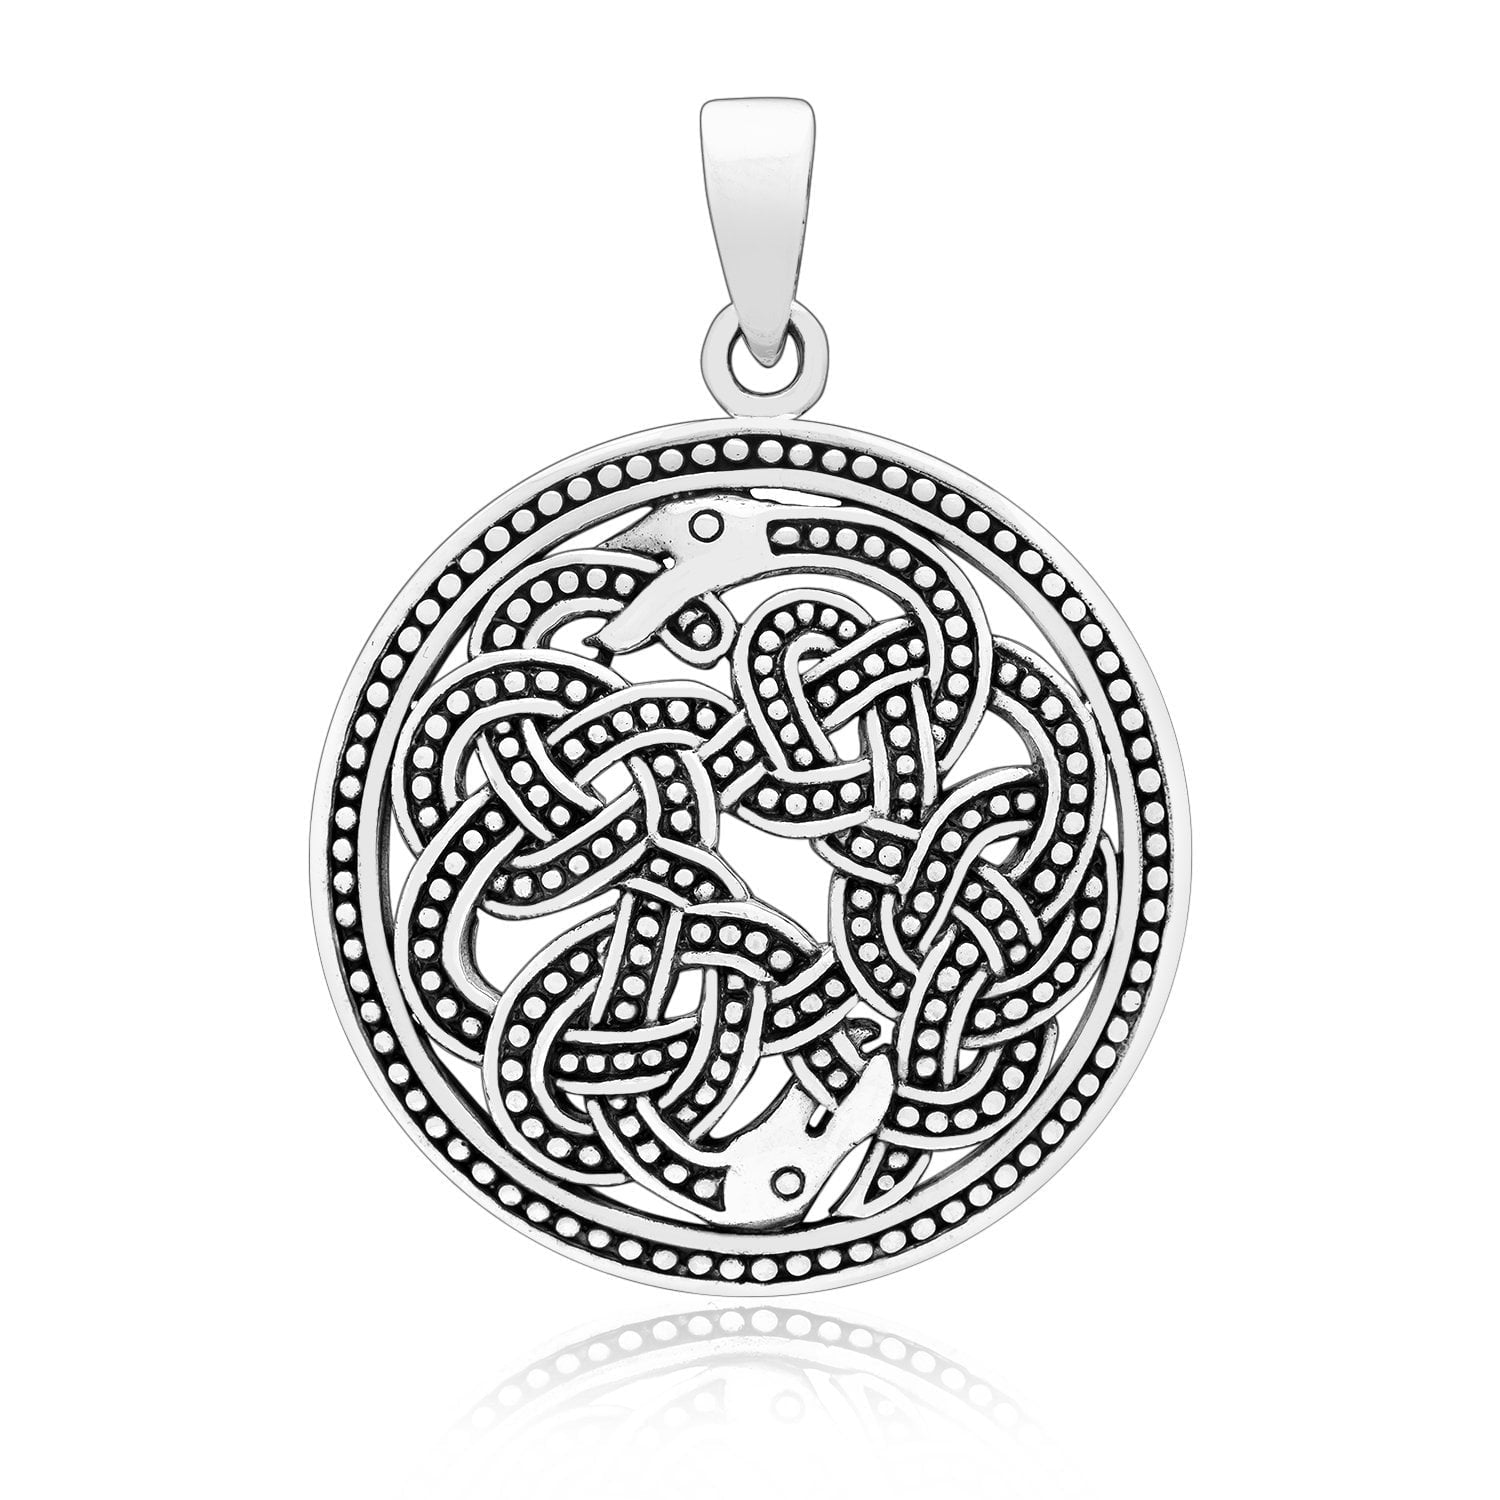 925 Sterling Silver Viking Jormungand Mammen Style Pendant